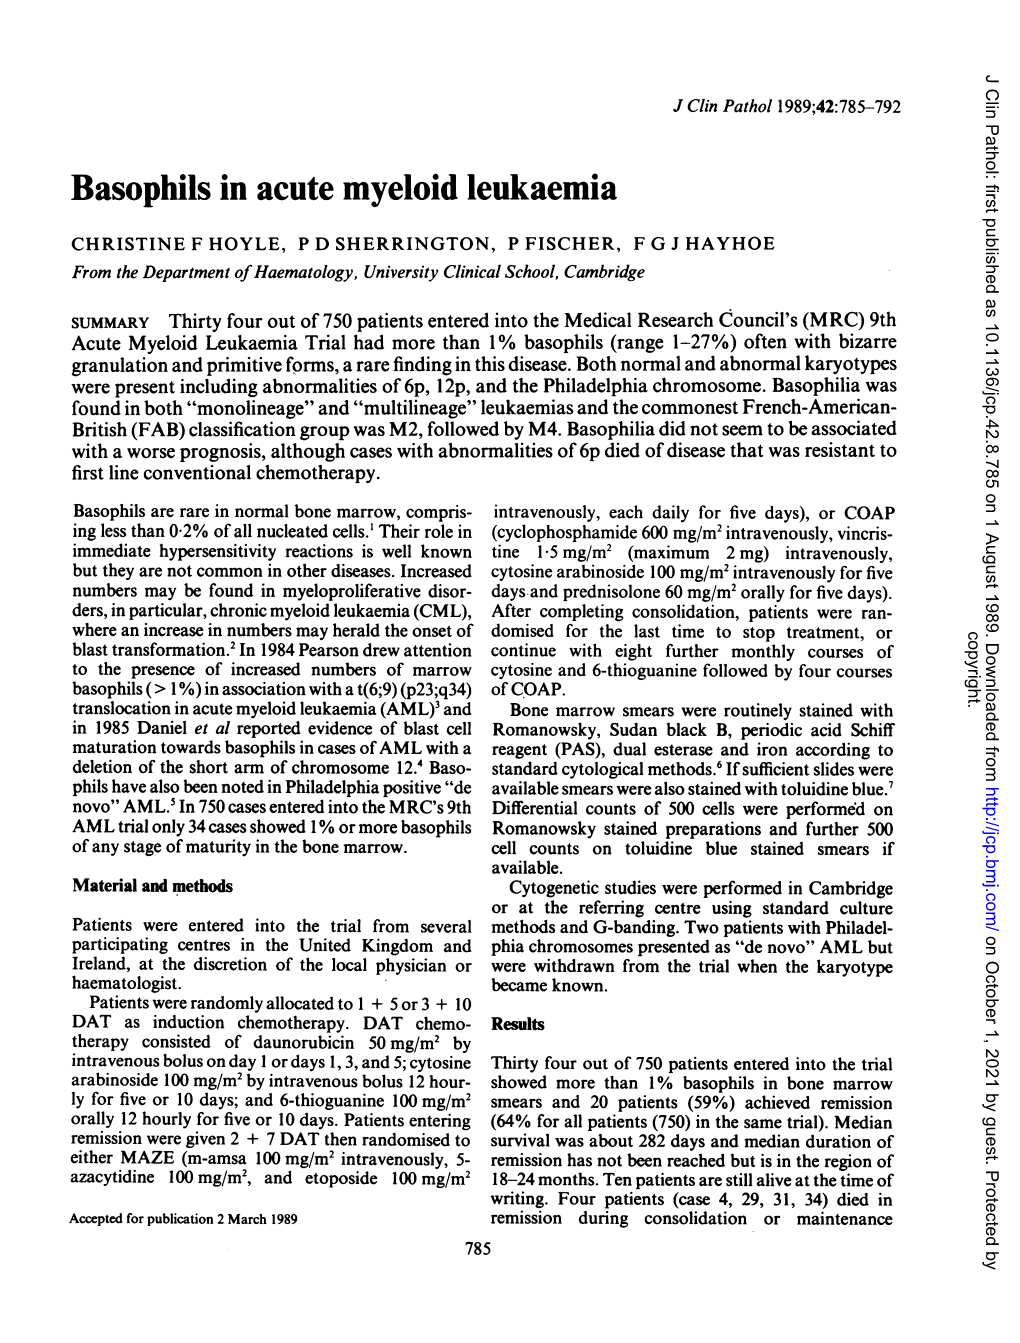 Basophils in Acute Myeloid Leukaemia